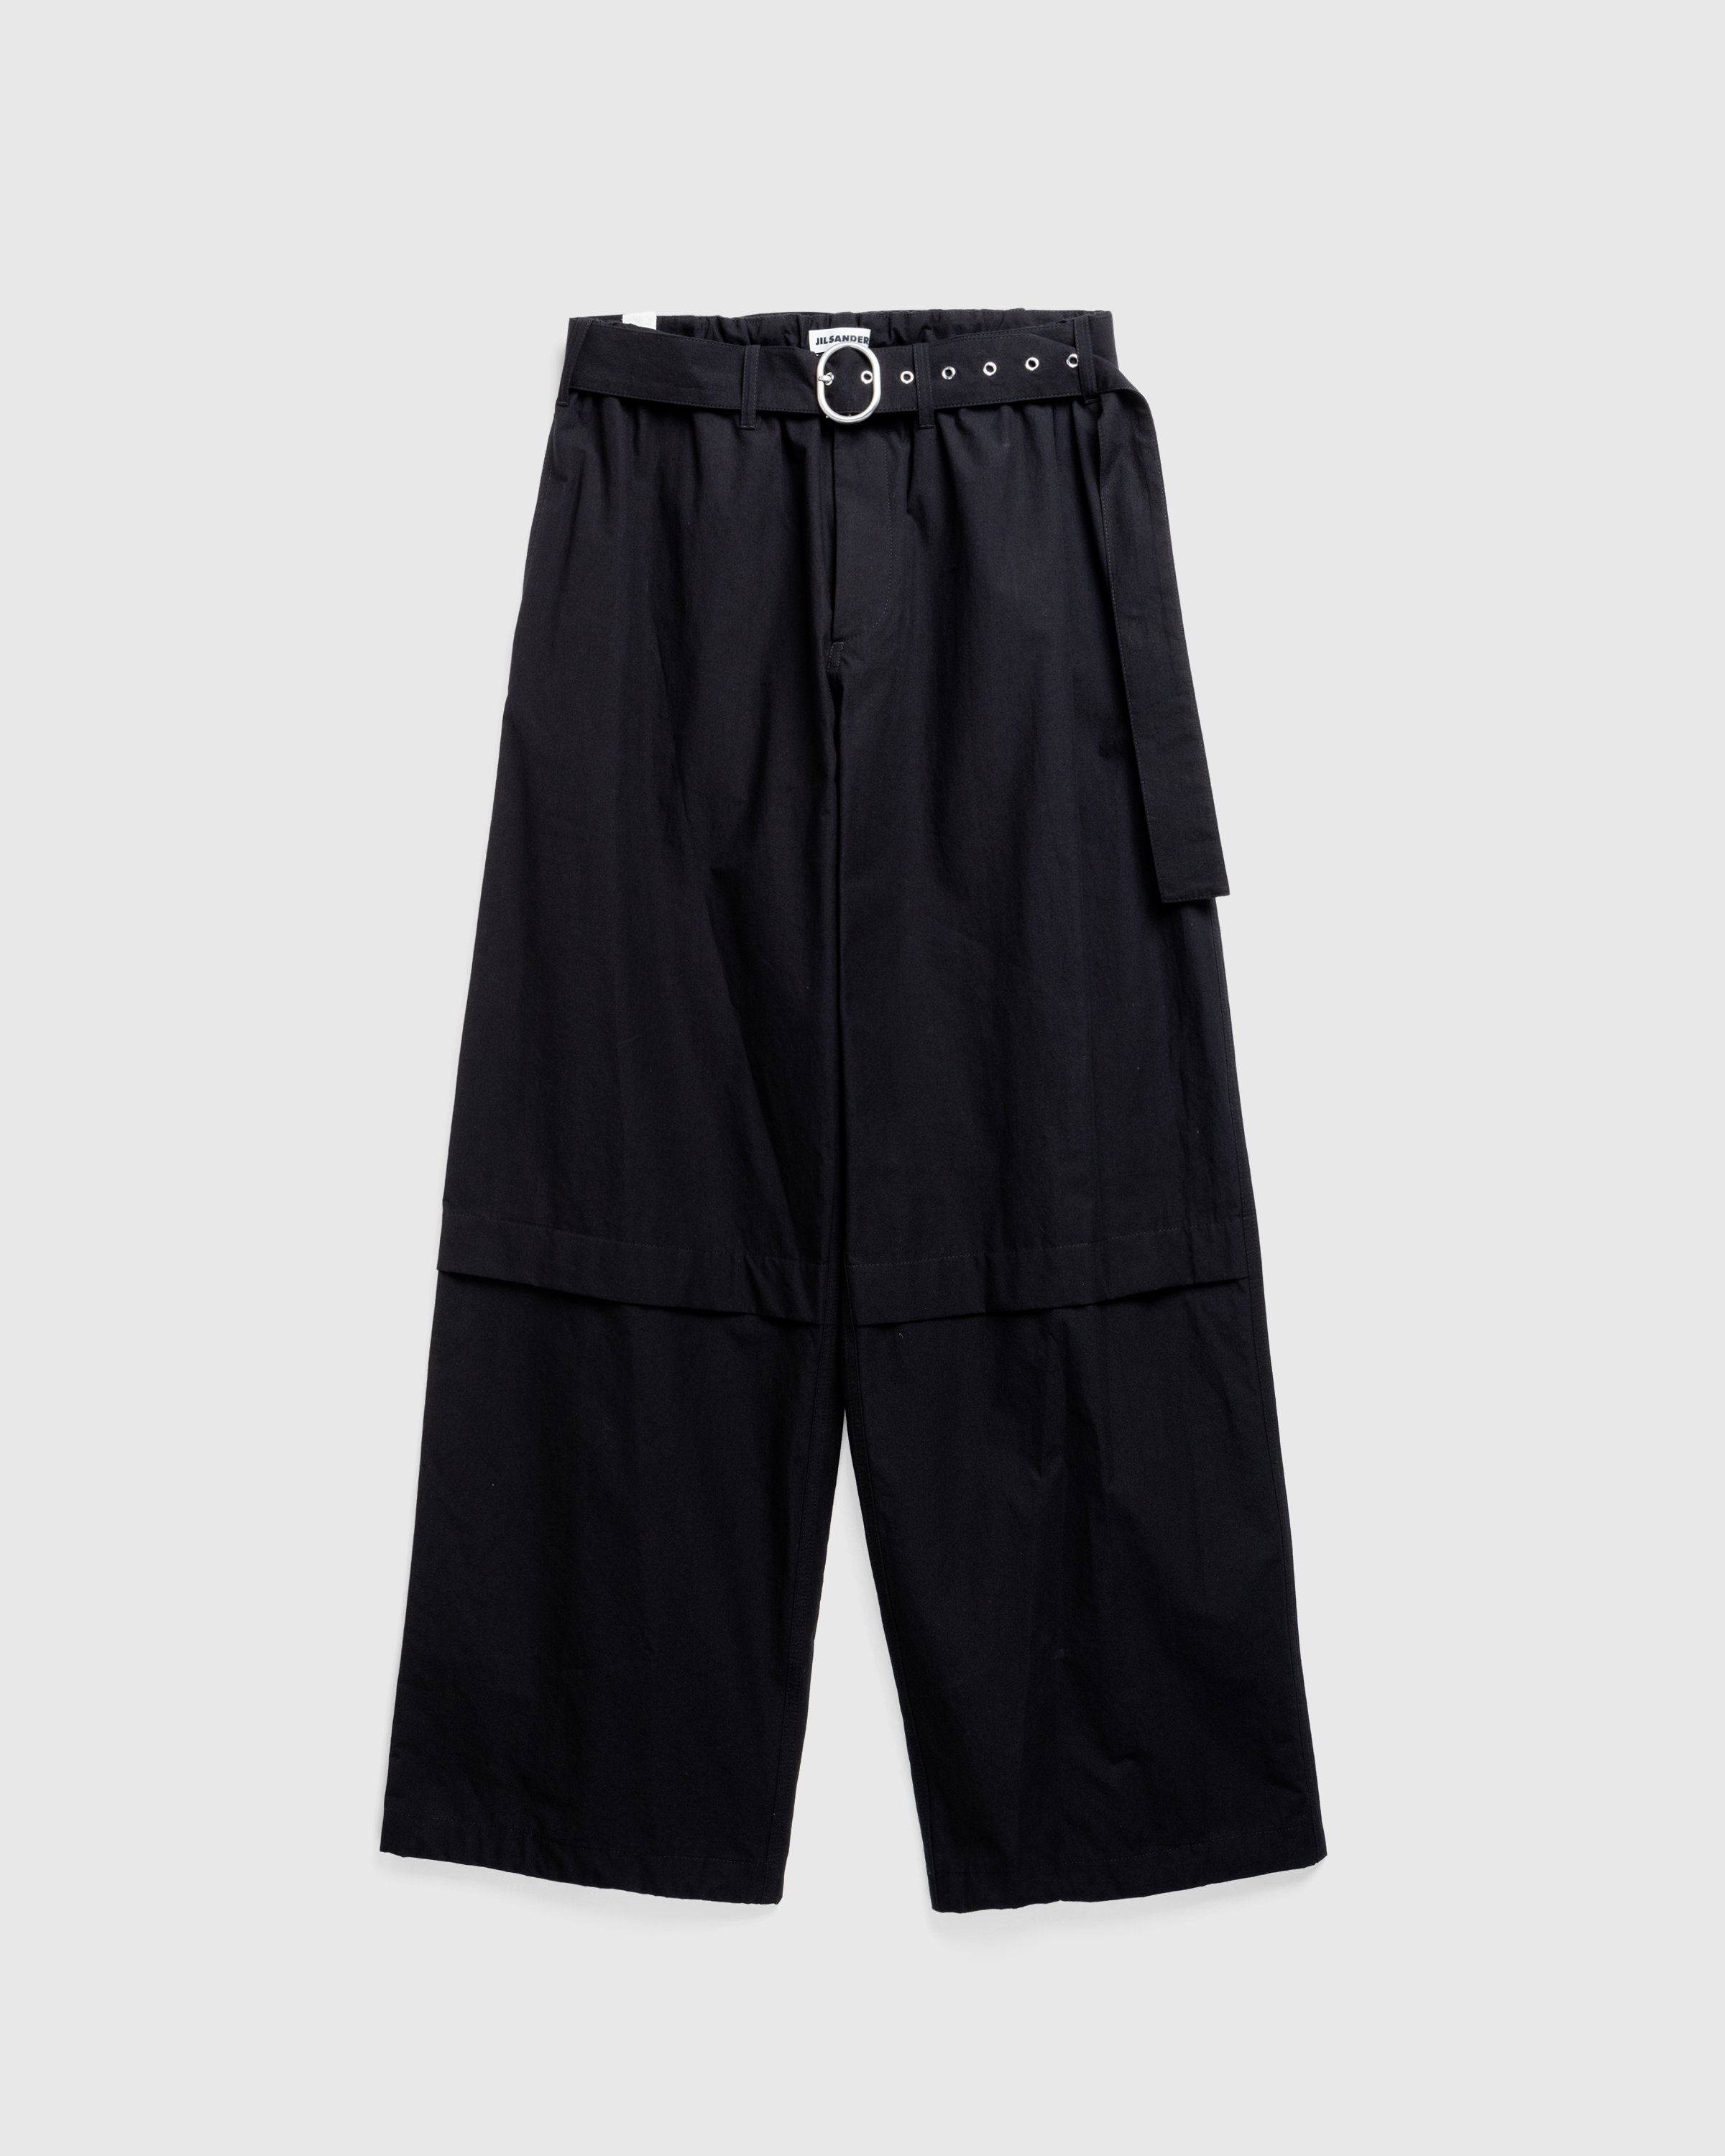 Jil Sander - Trouser 93 - Clothing - Black - Image 1